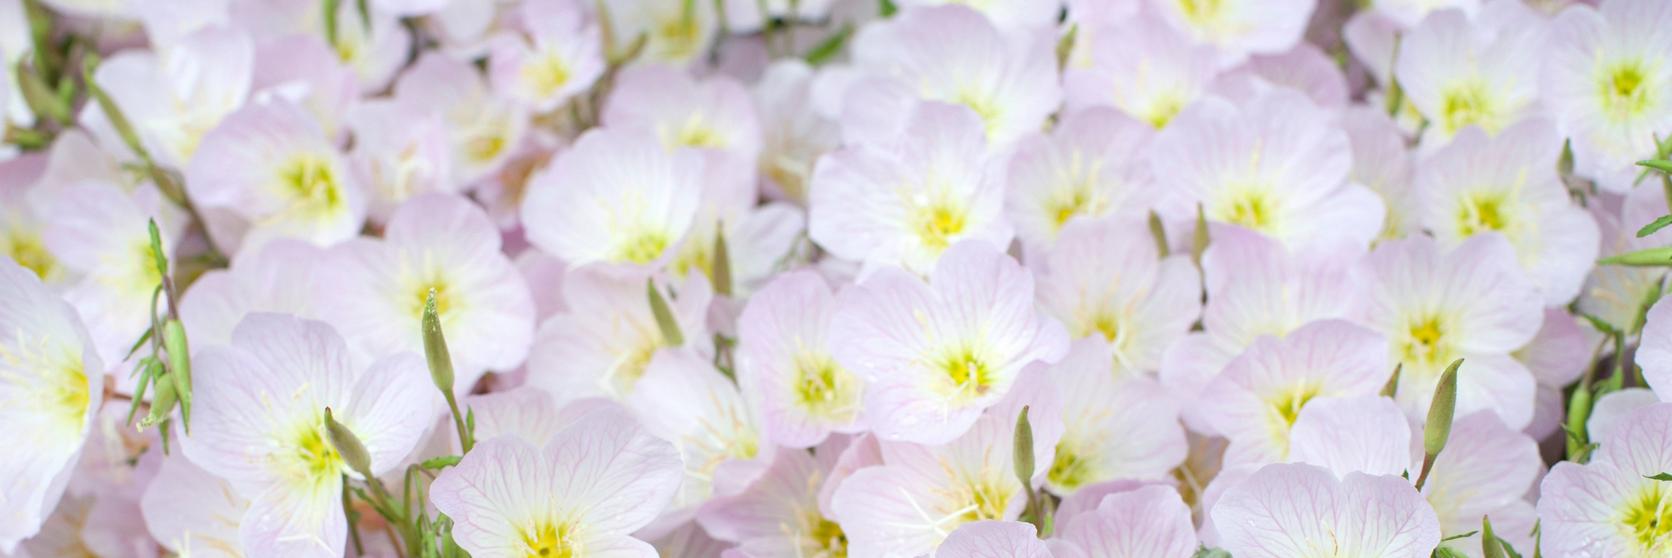 primrose-pink-white-flowers